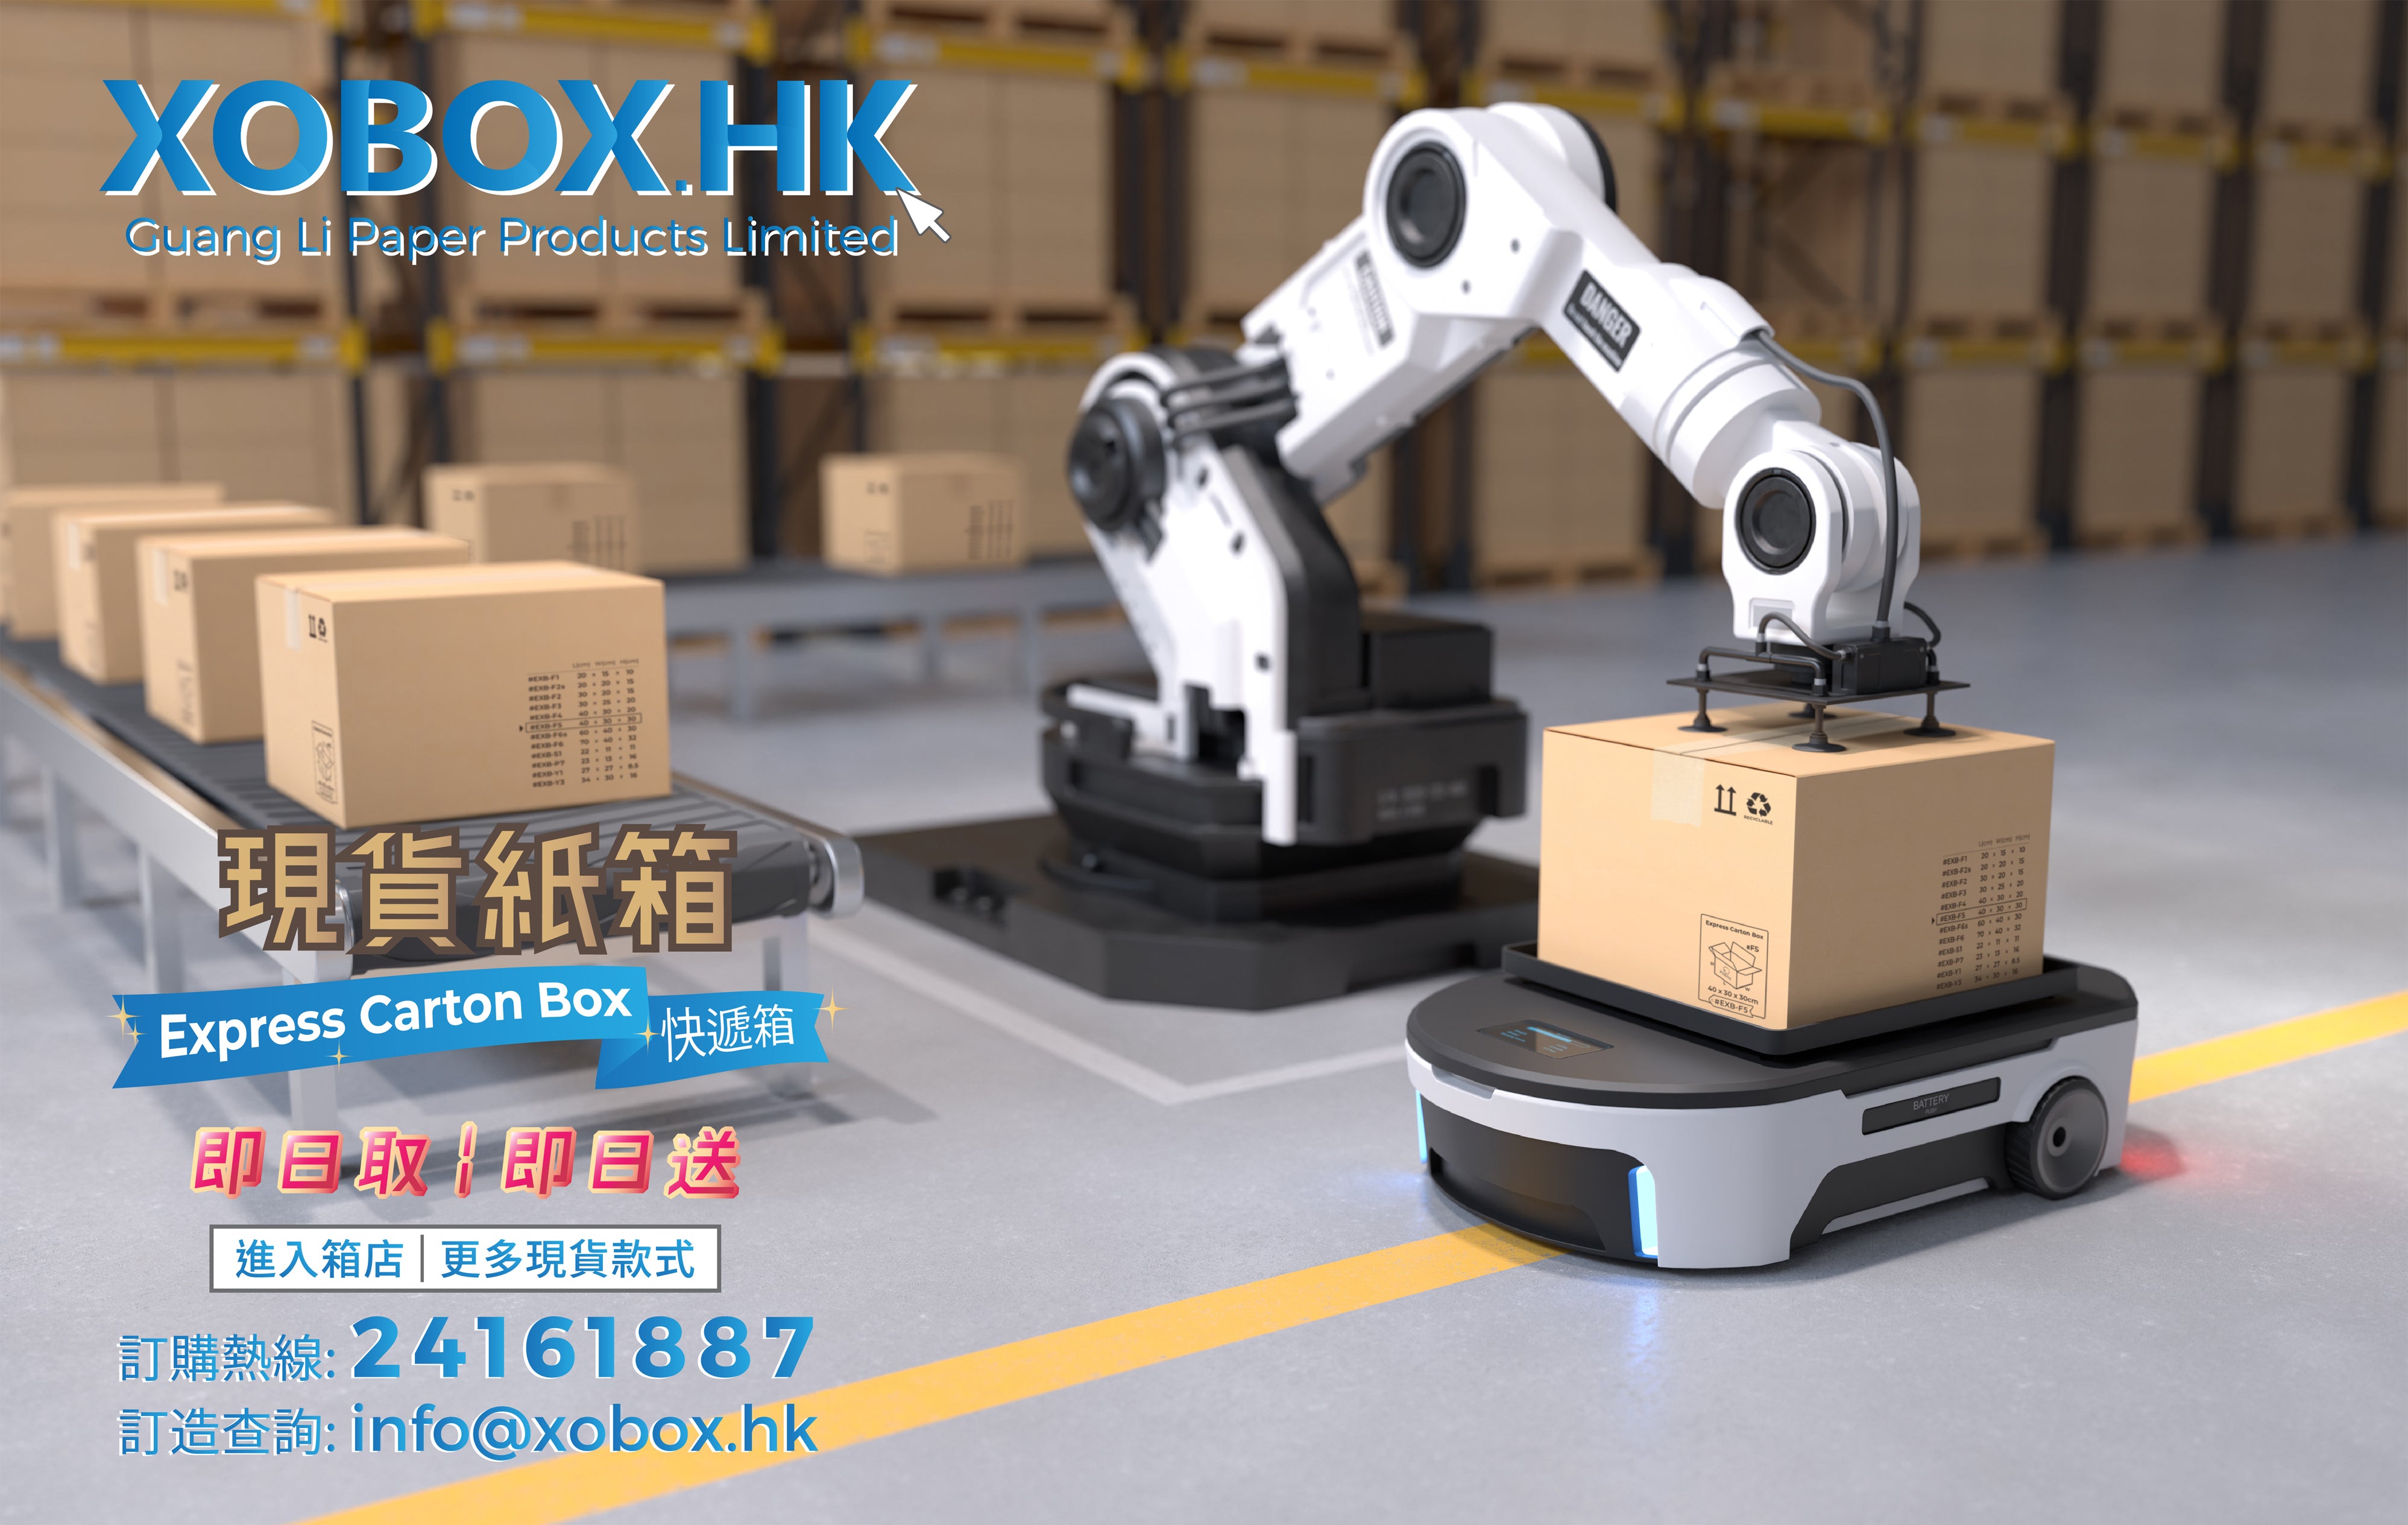 Express Carton Box 快遞紙箱– XOBOX.HK